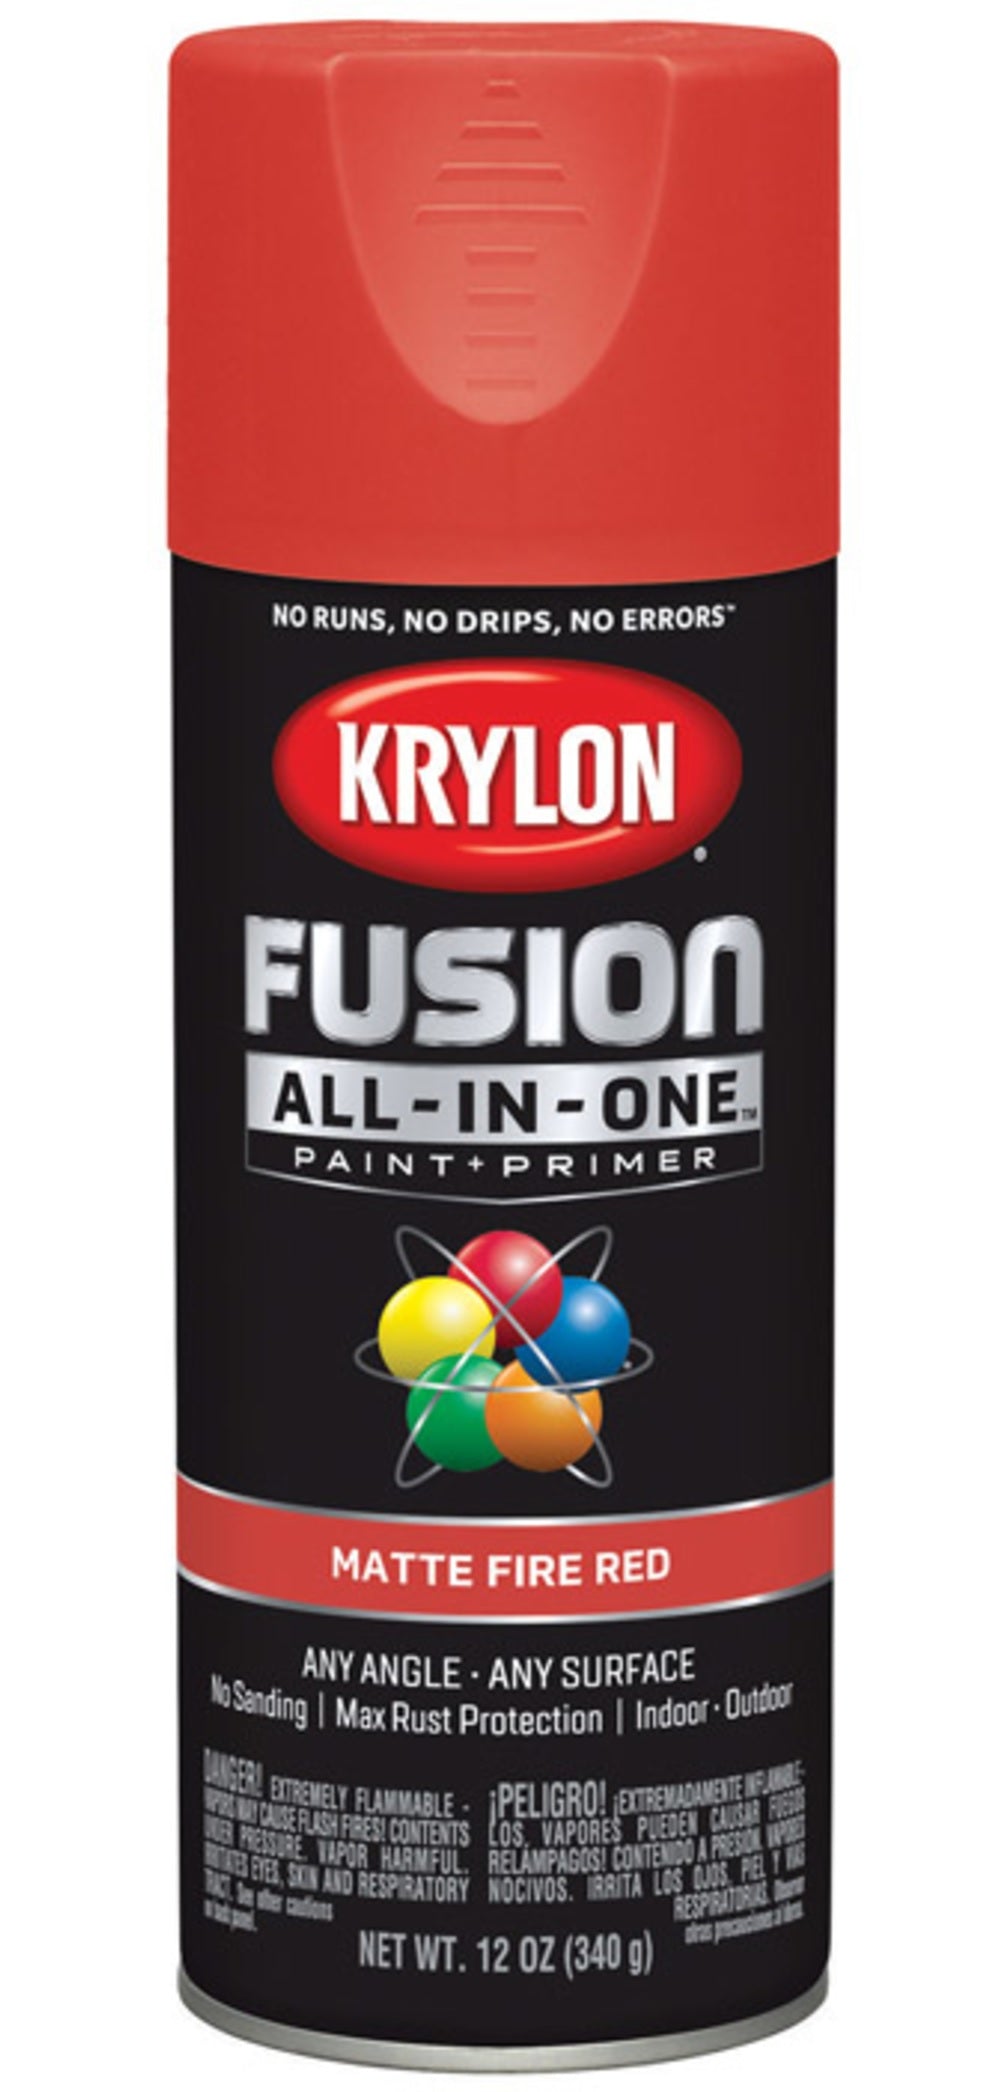 Krylon K02756007 Fusion Paint + Primer Spray Paint, 12 Oz